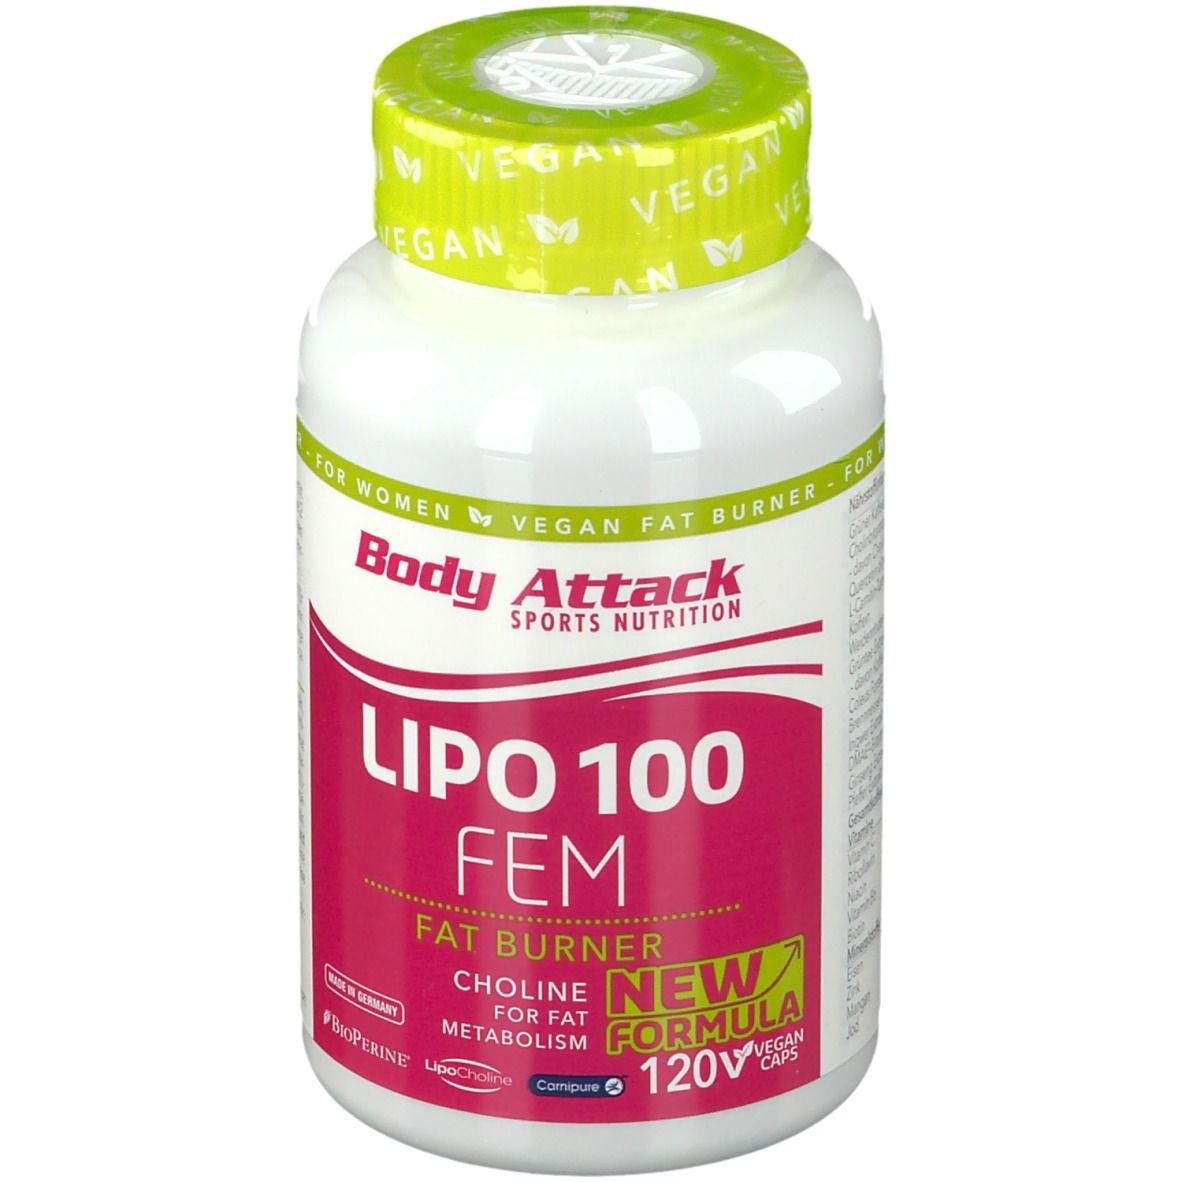 Body Attack LIPO 100 FEM